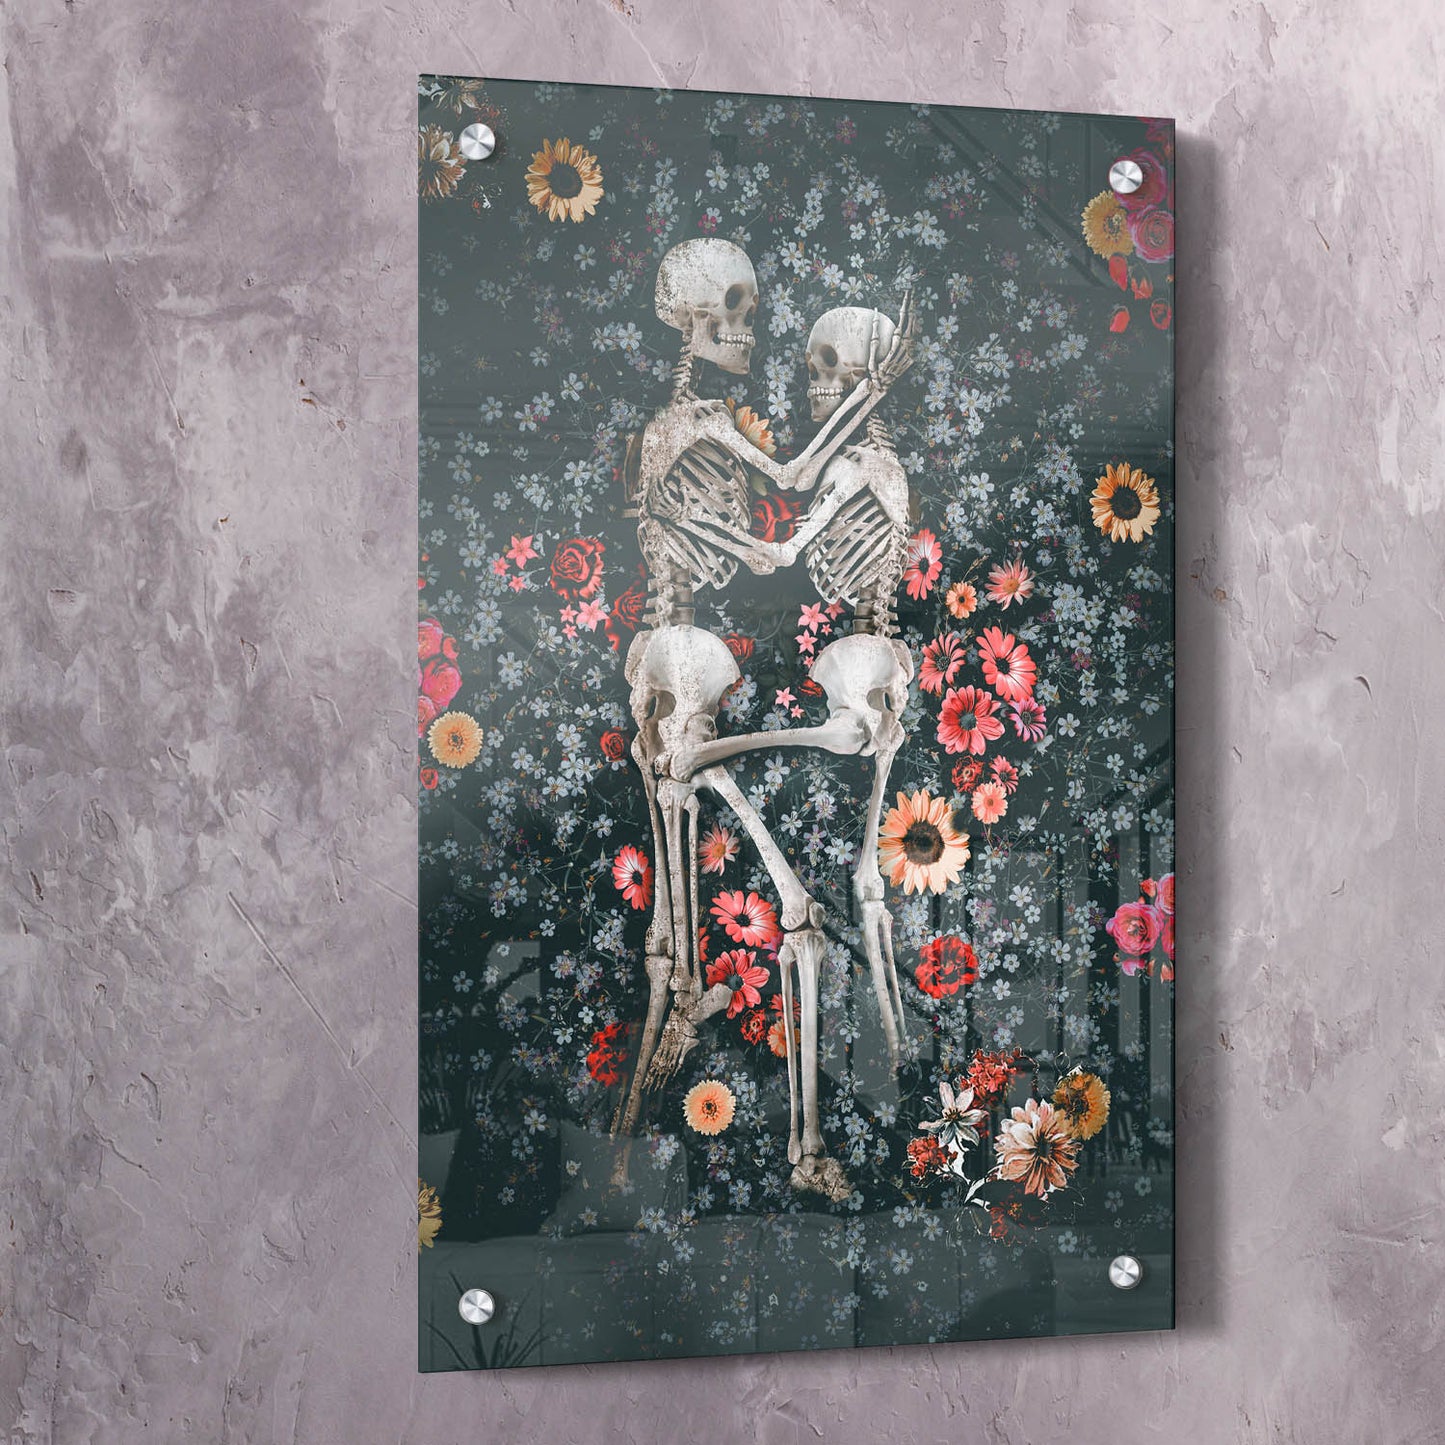 Skeleton Love Wall Art | Inspirational Wall Art Motivational Wall Art Quotes Office Art | ImpaktMaker Exclusive Canvas Art Portrait